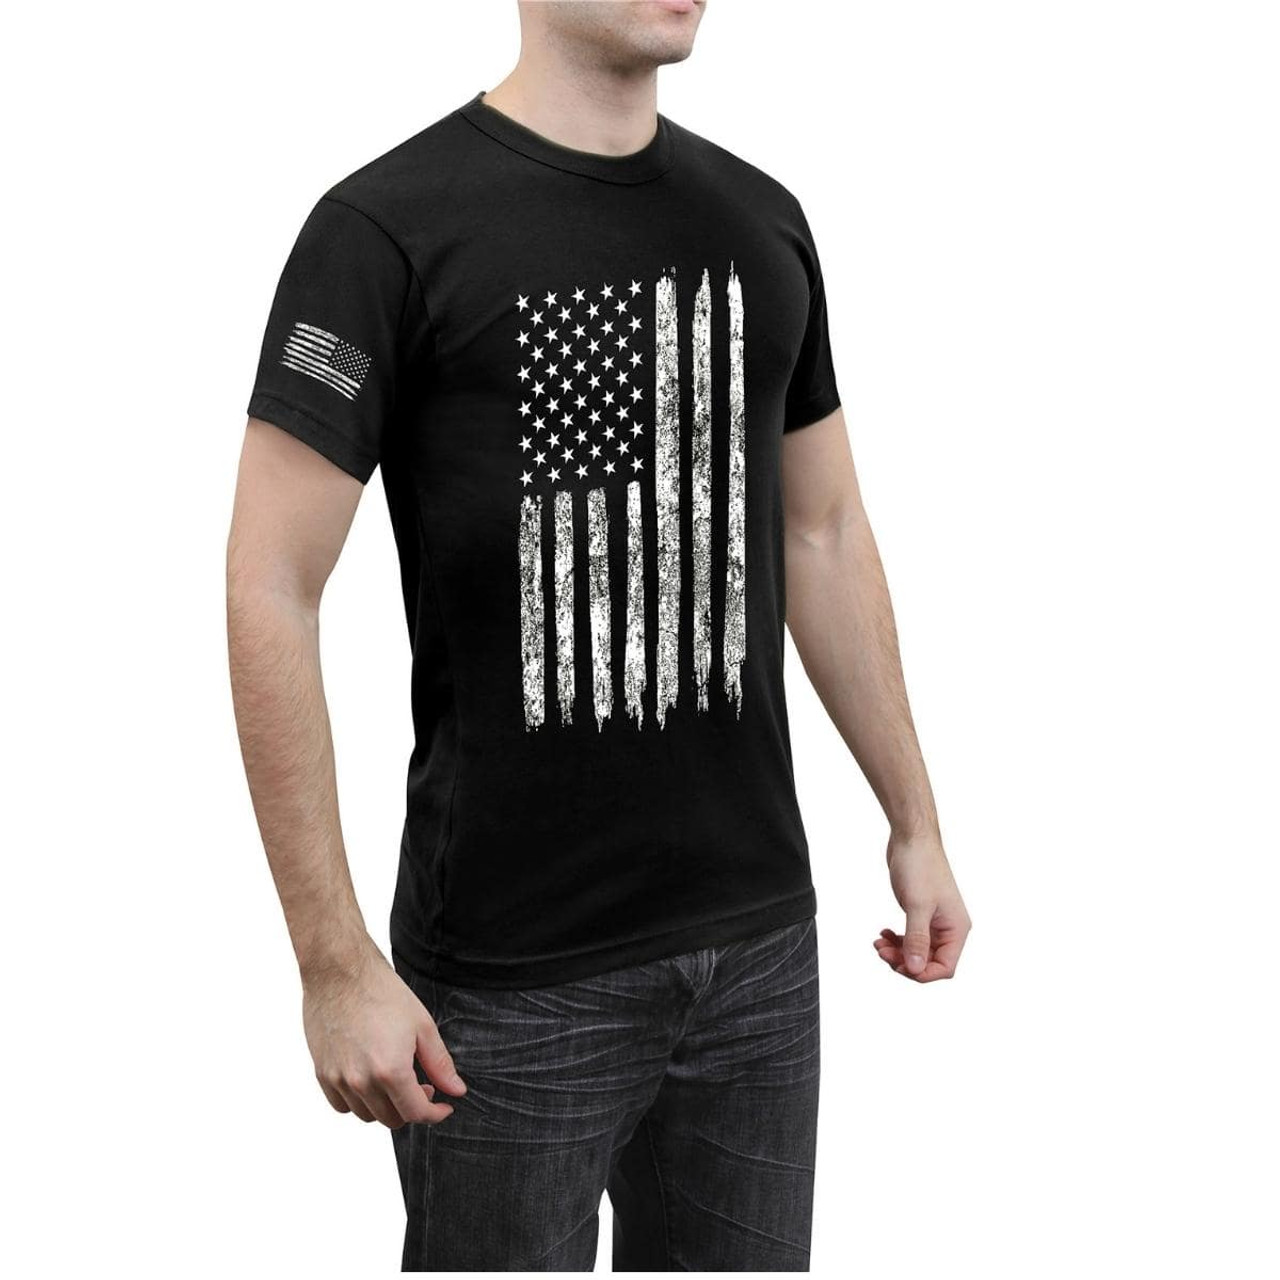 U.S. Flag Athletic Fit T-Shirt